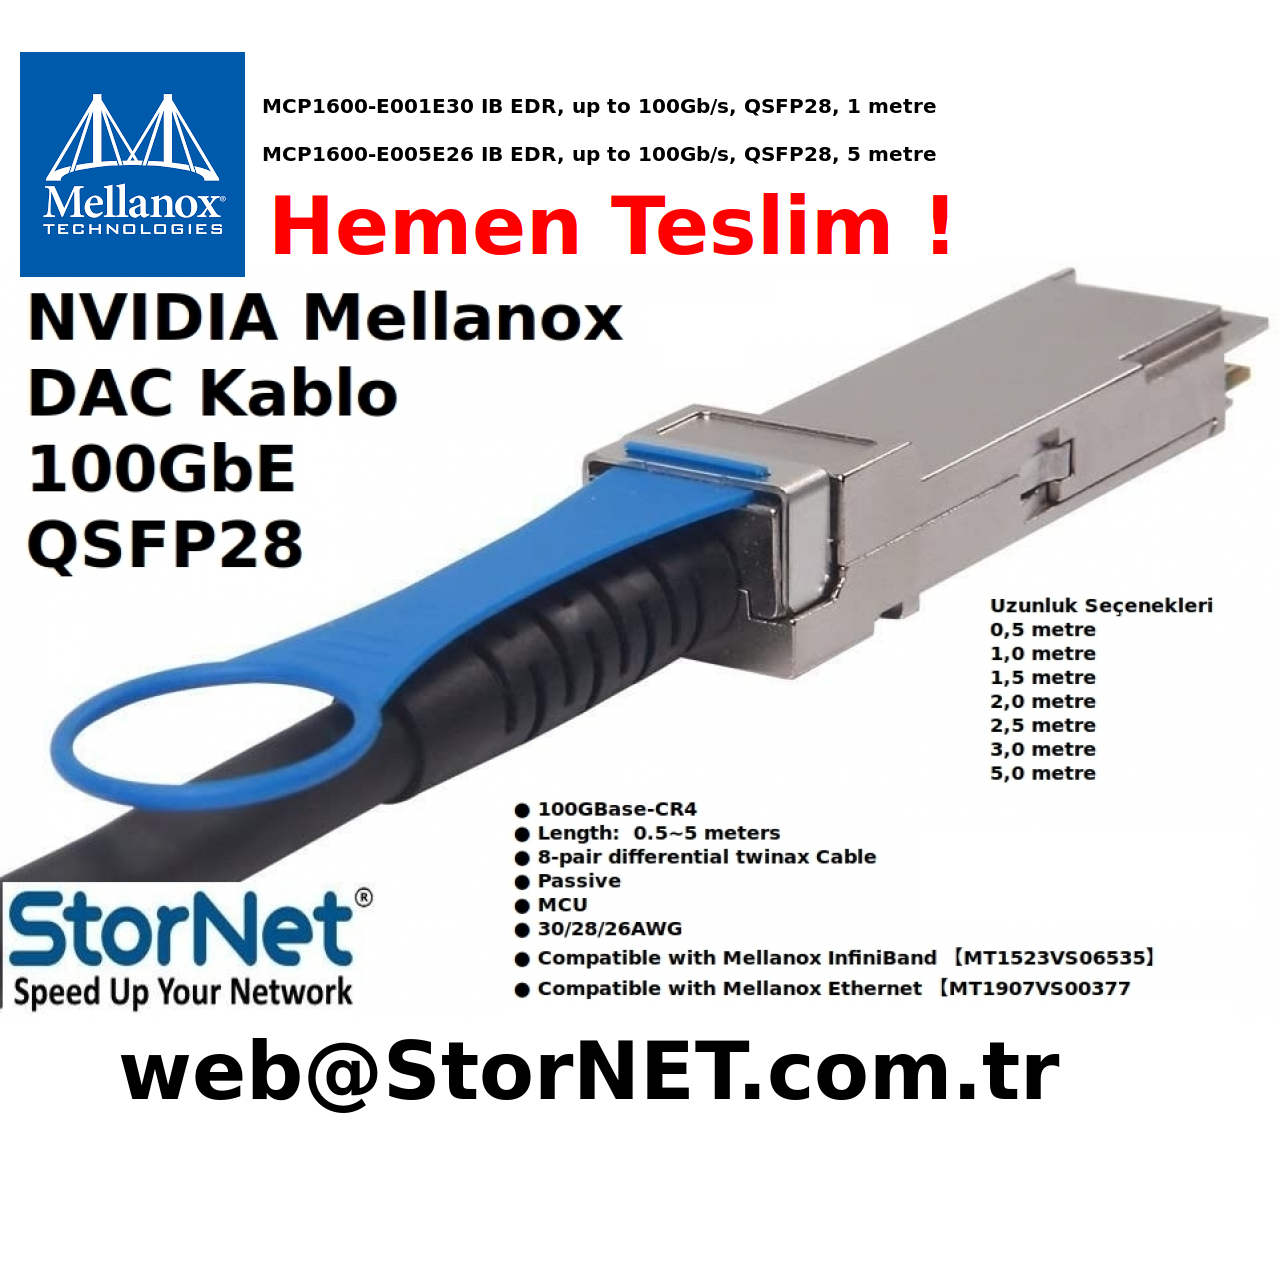 NVIDIA Mellanox MCP1600-E005E26 DAC Kablo IB EDR 100Gb QSFP28  5 metre